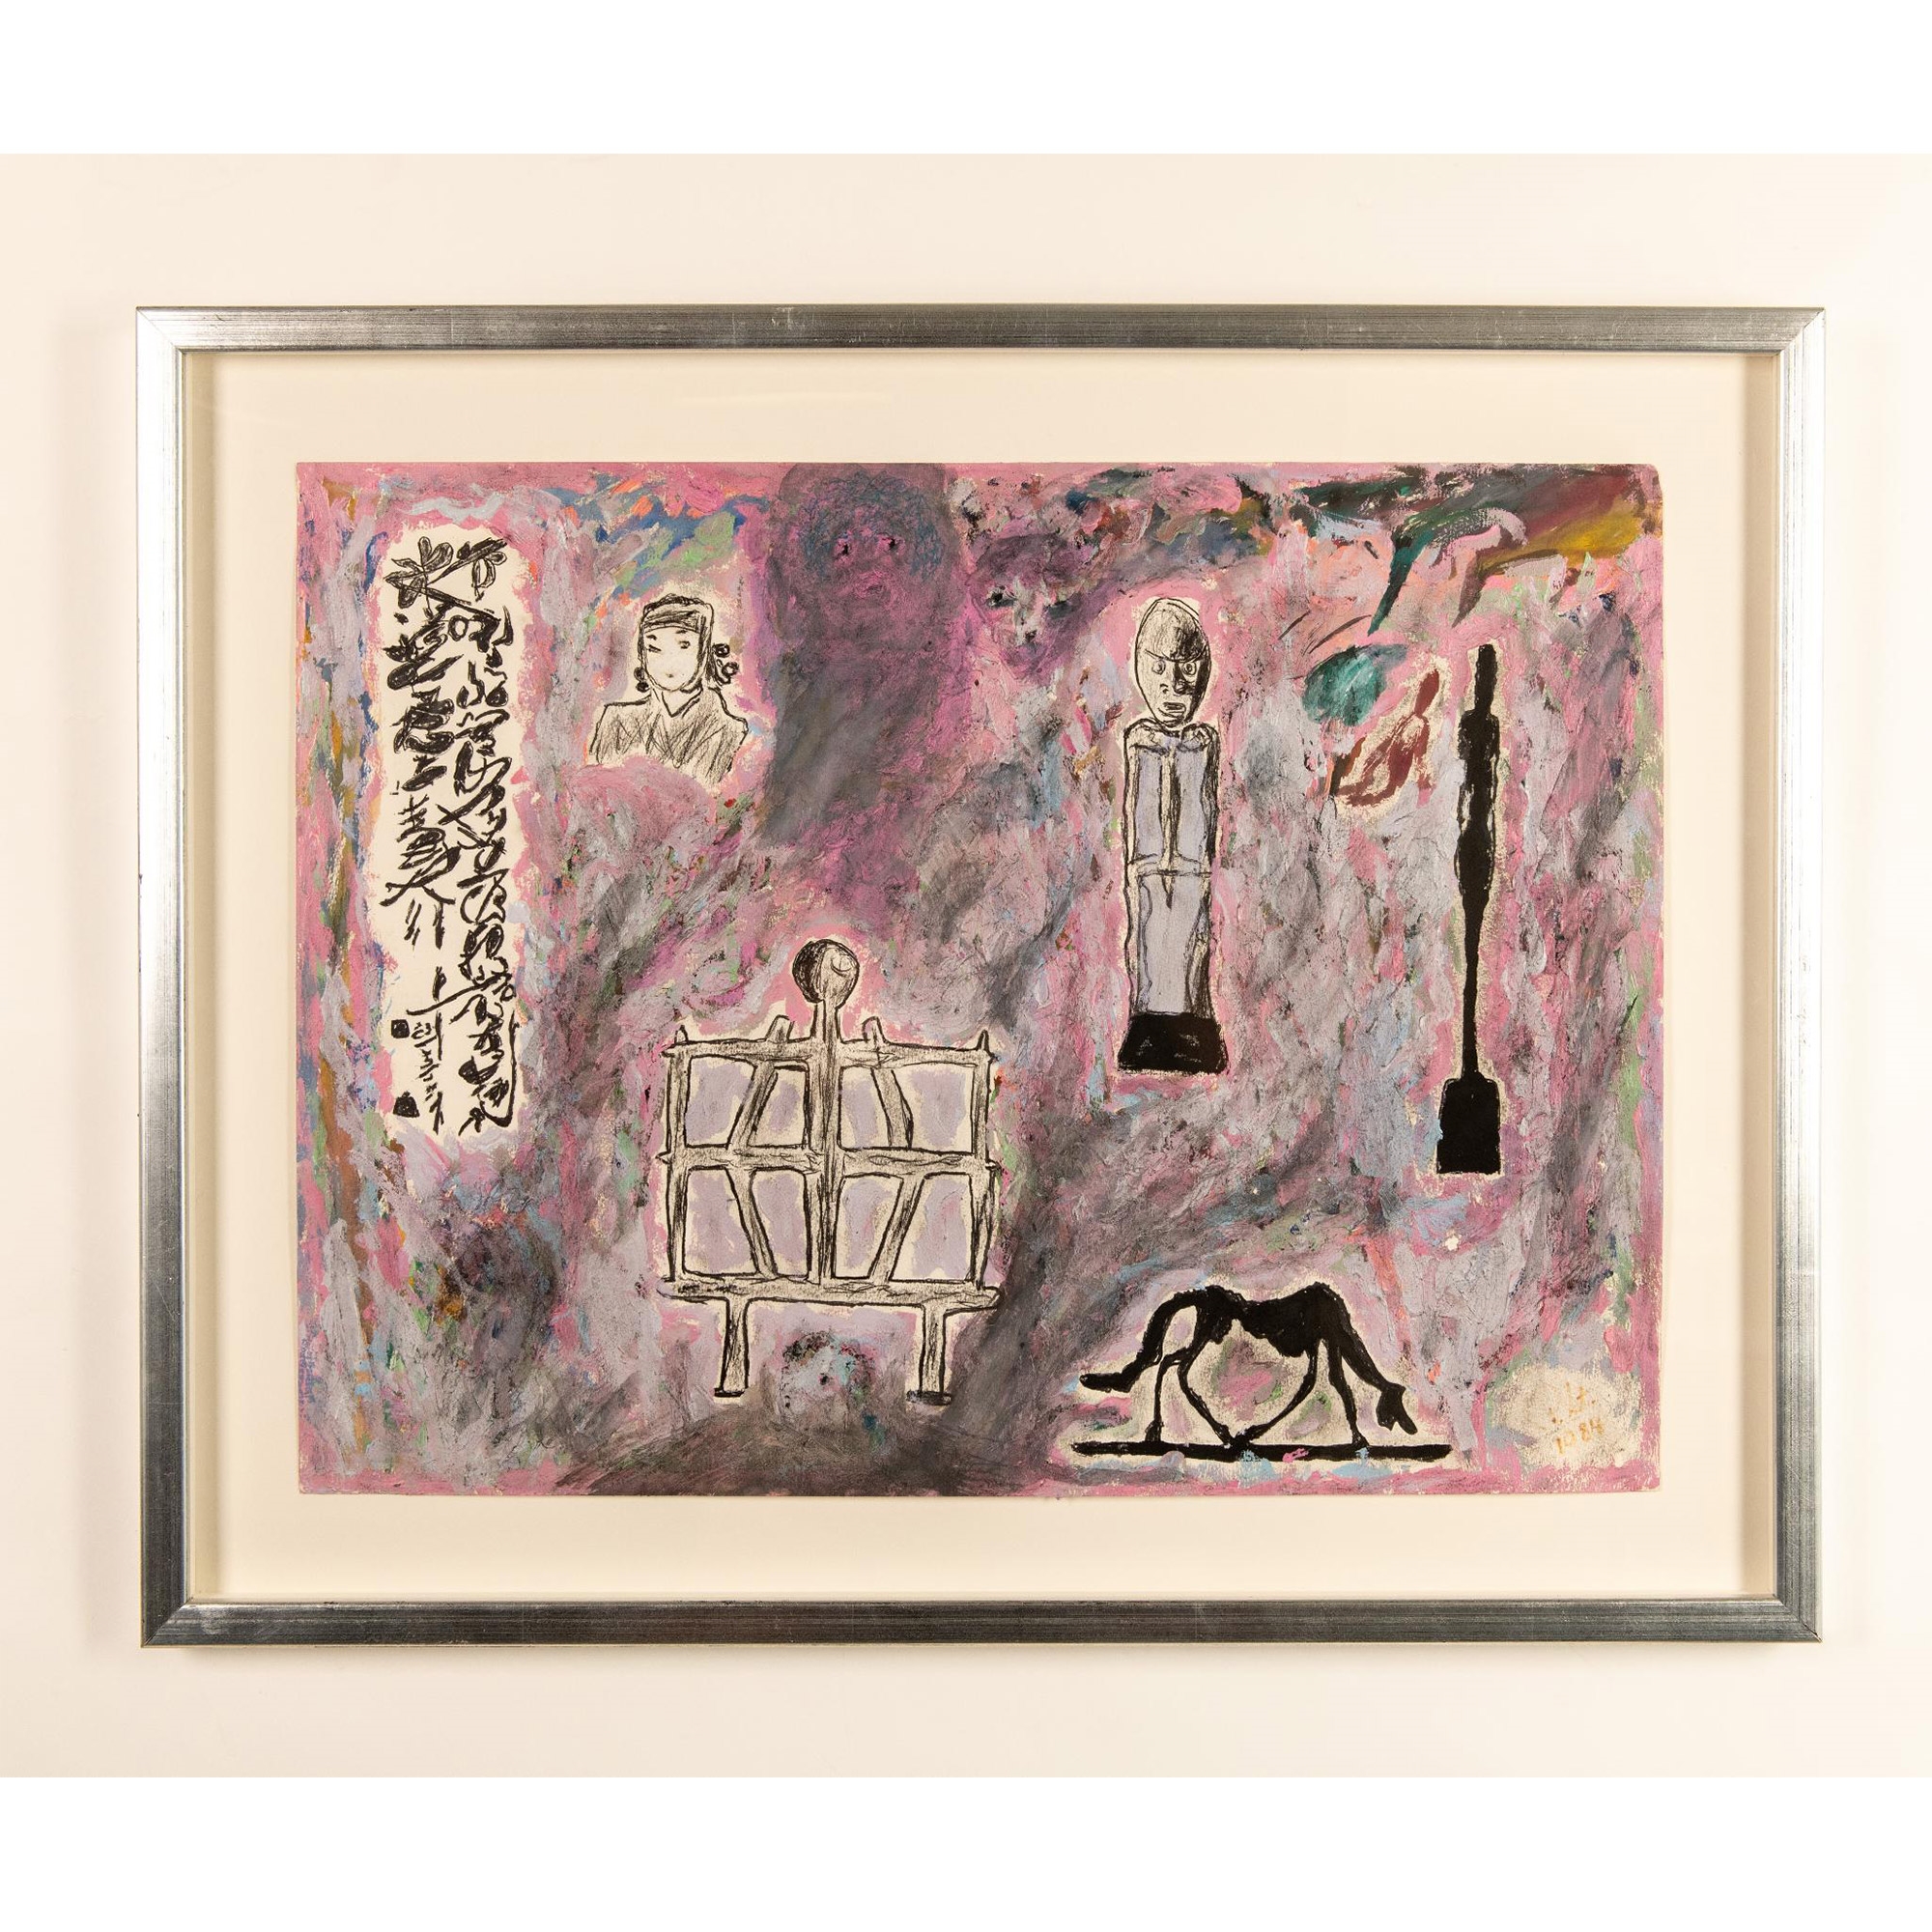 Original Gouache and Wax Crayon on Wove Paper, Signed - Alberto Giacometti